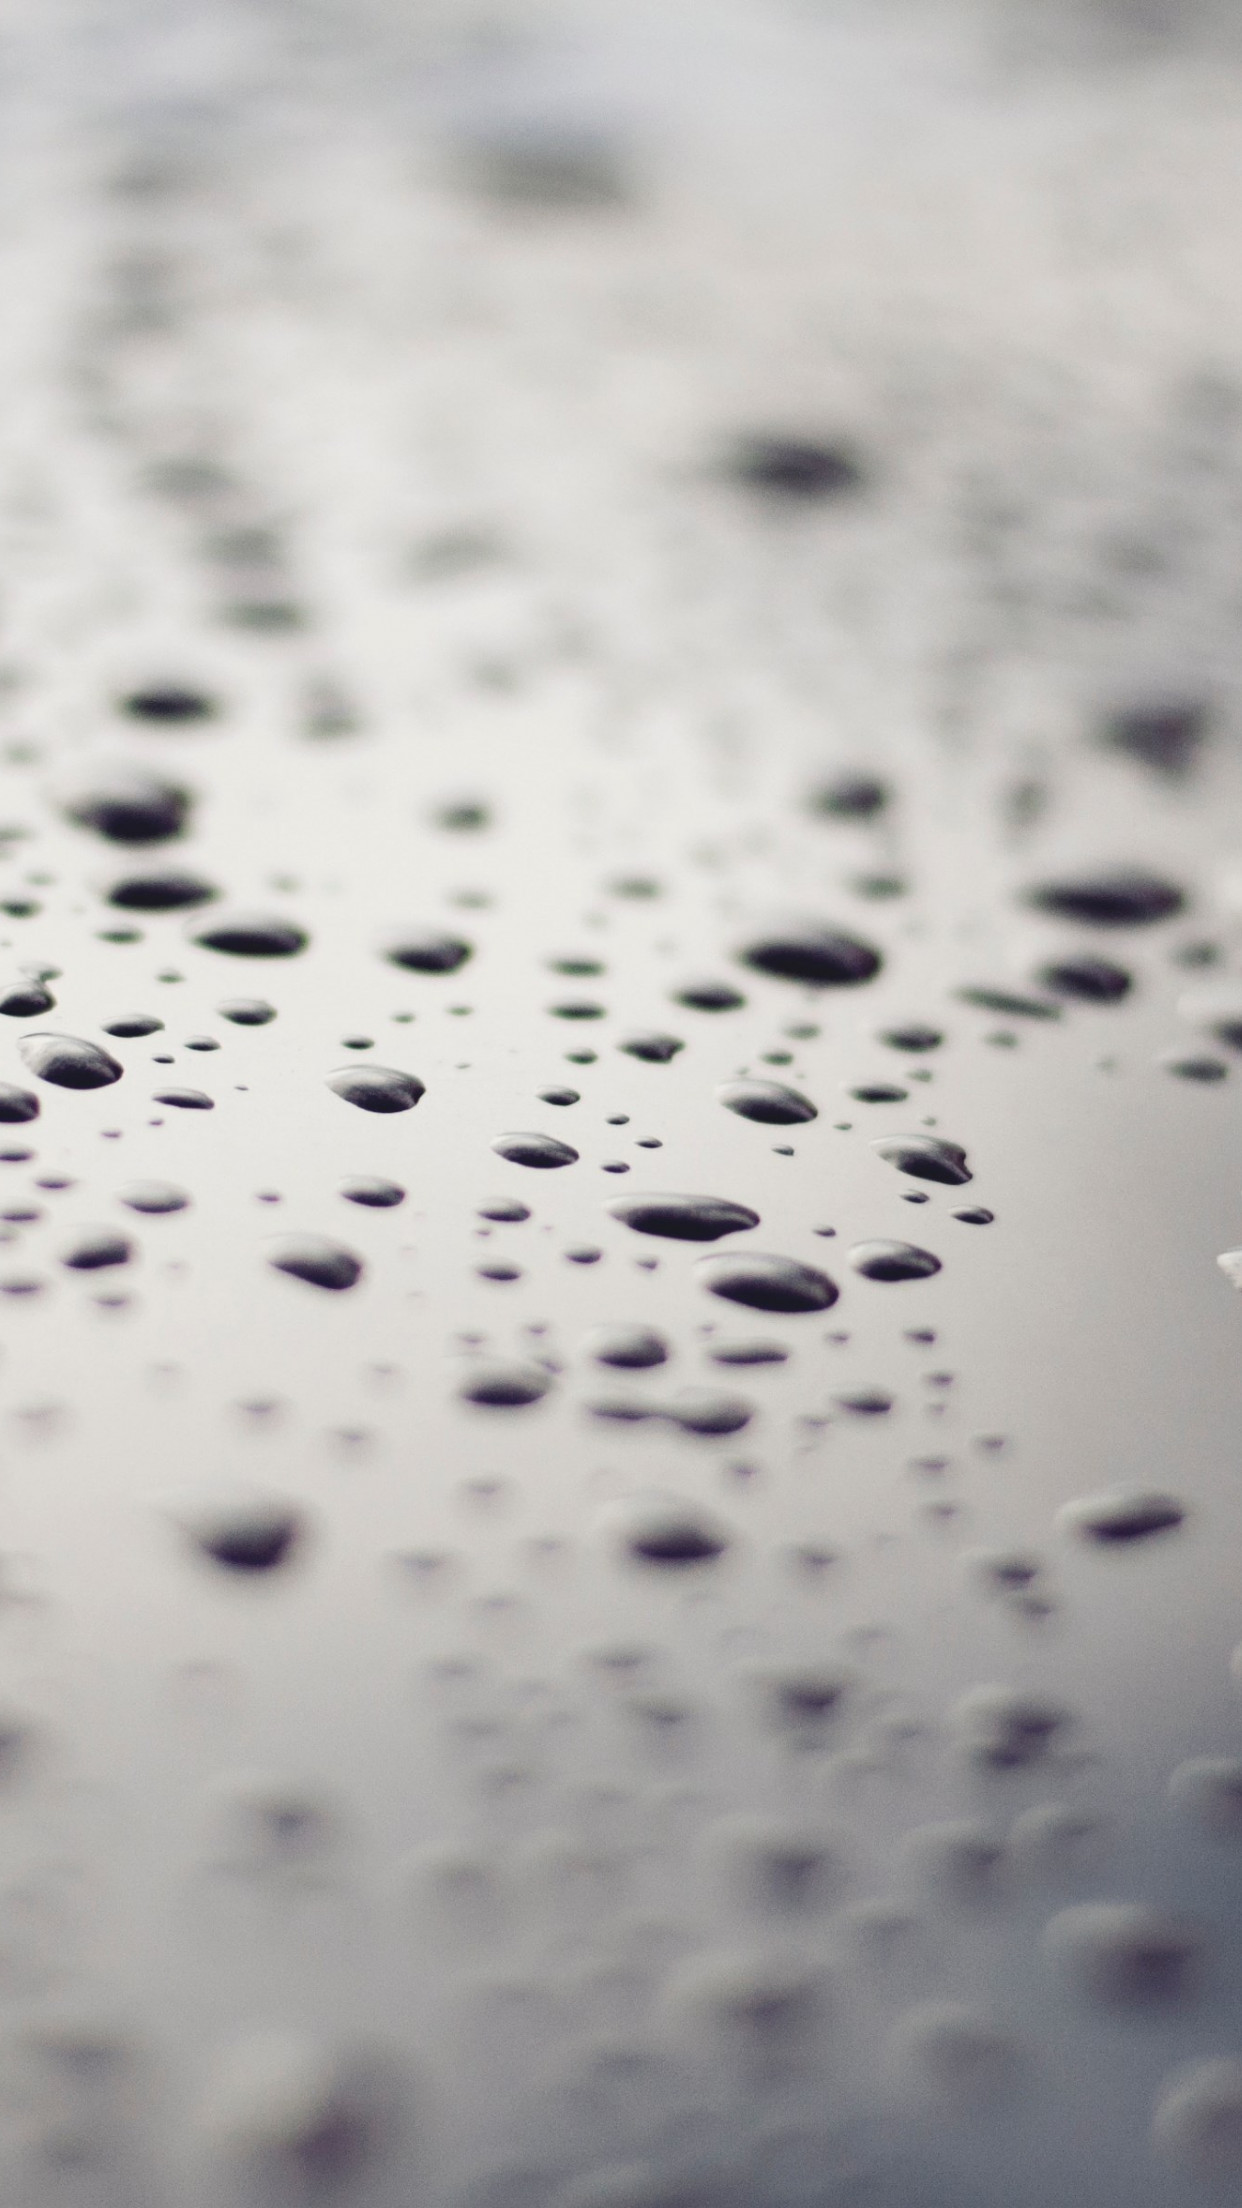 Raindrops on a metallic surface wallpaper 1242x2208